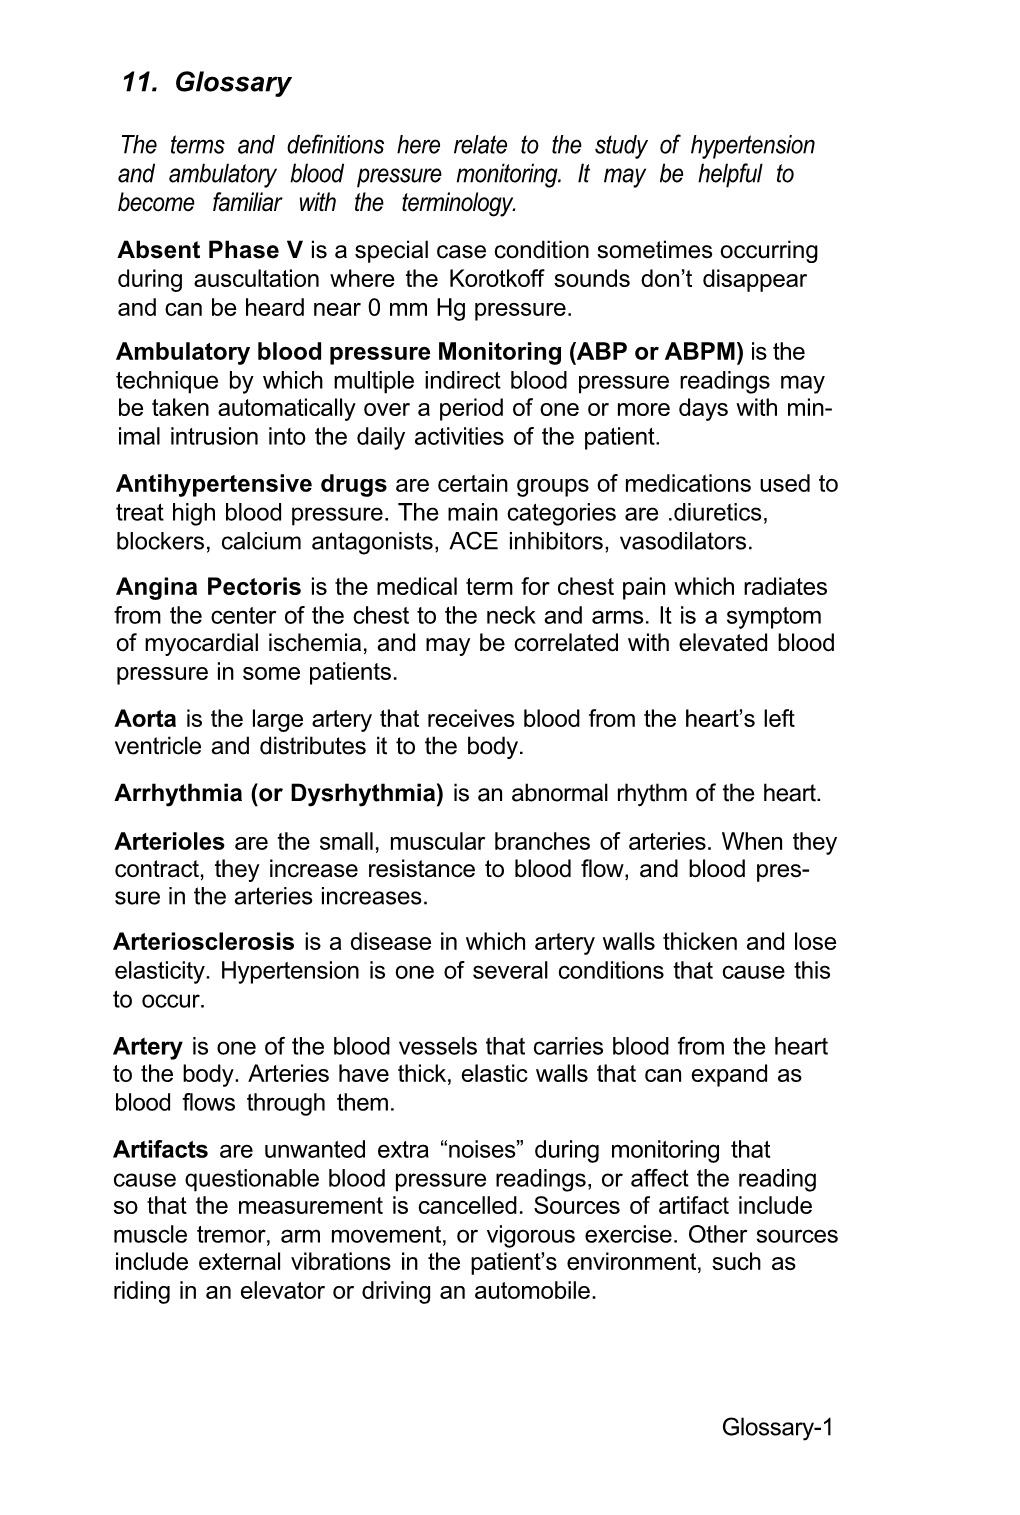 Blood Pressure Glossary